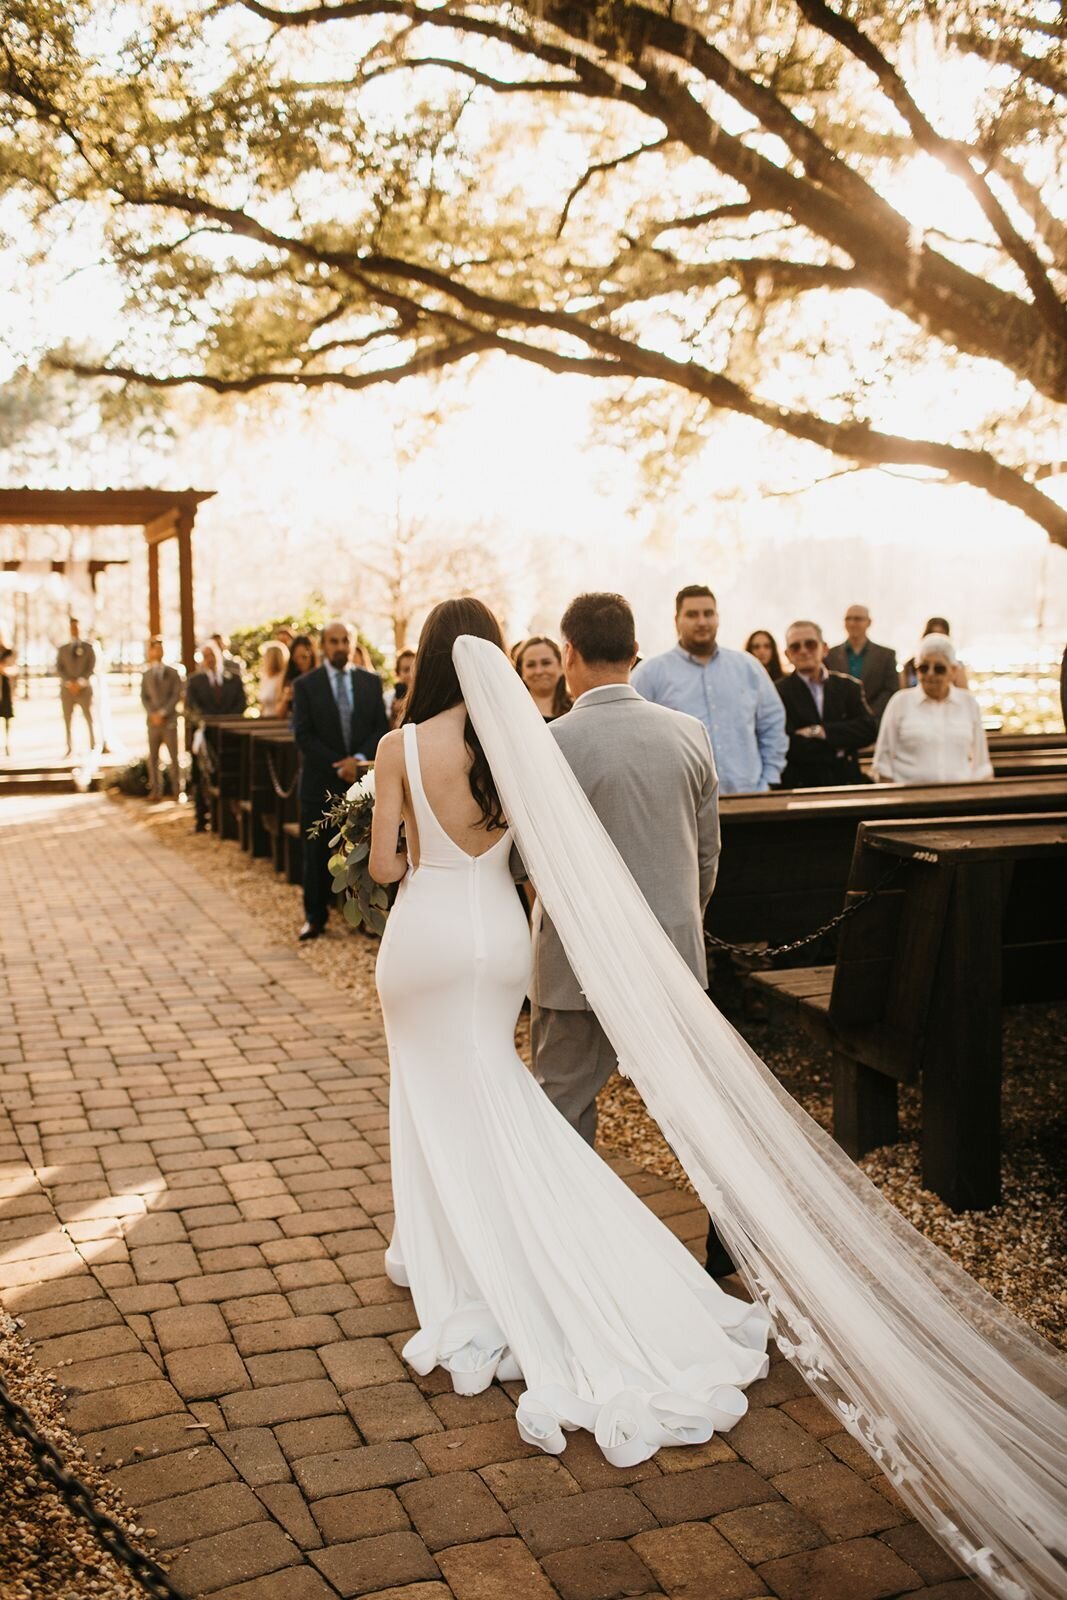 Father walking bride down the aisle at Club Lake Plantation in Apopka, FL